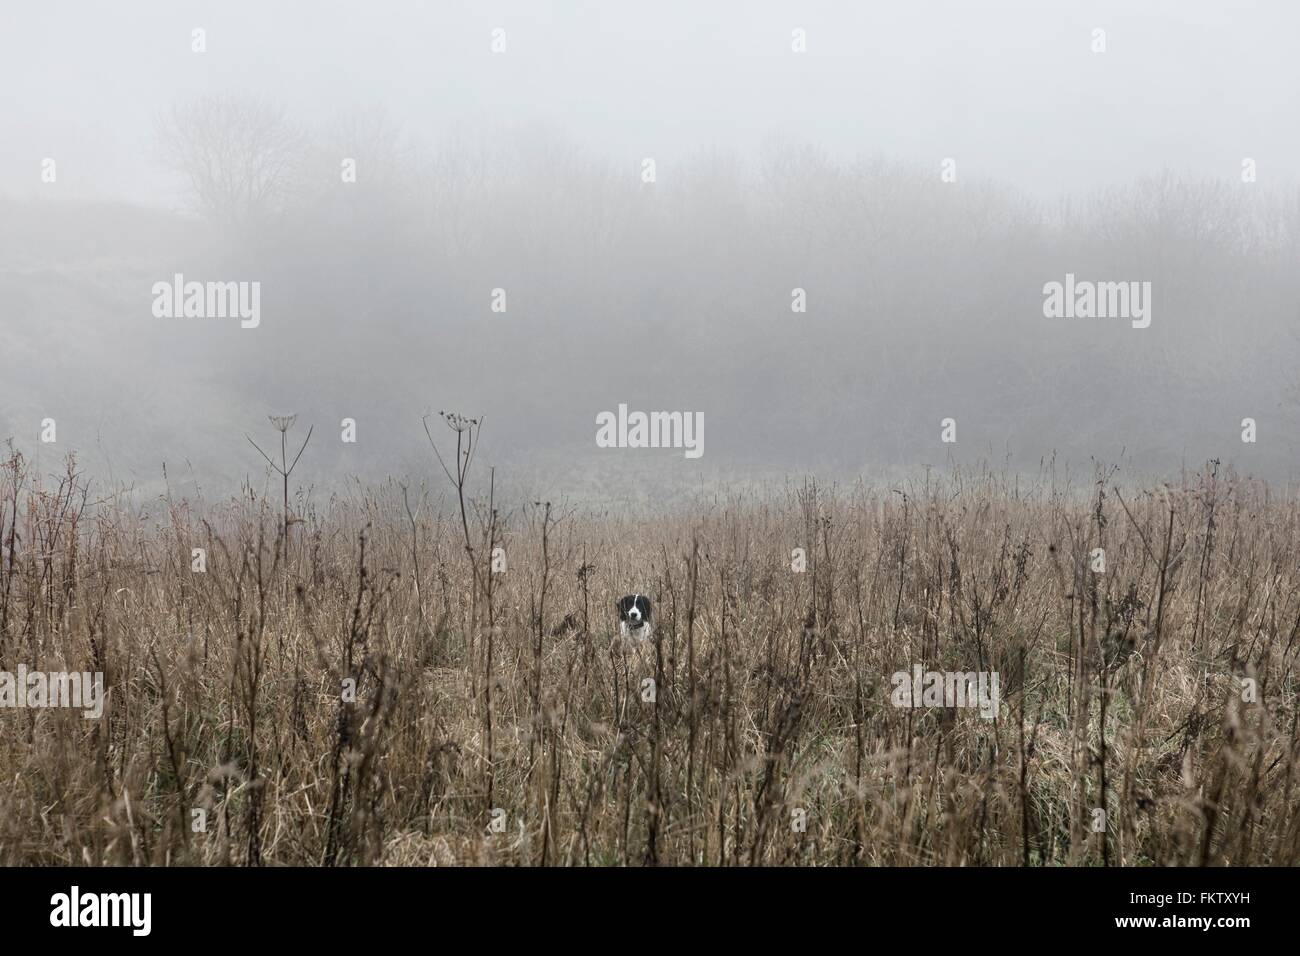 Dog in misty countryside landscape Stock Photo